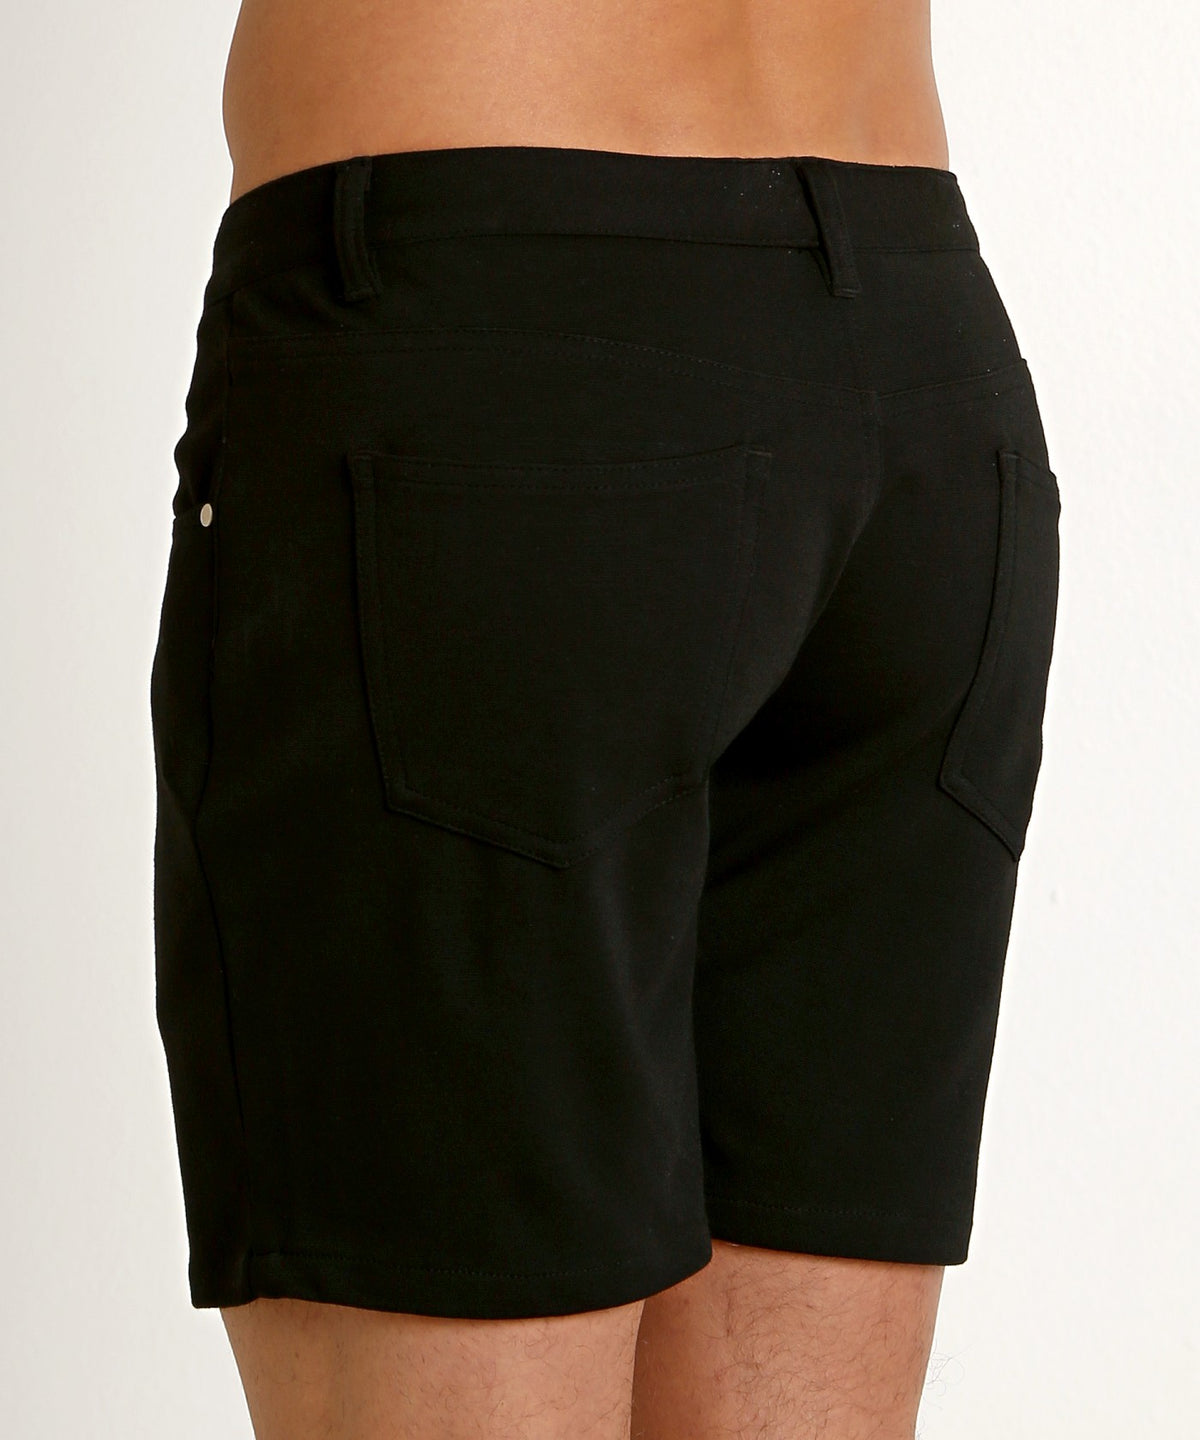 Stretch Knit Shorts (5" inseam) (Black)